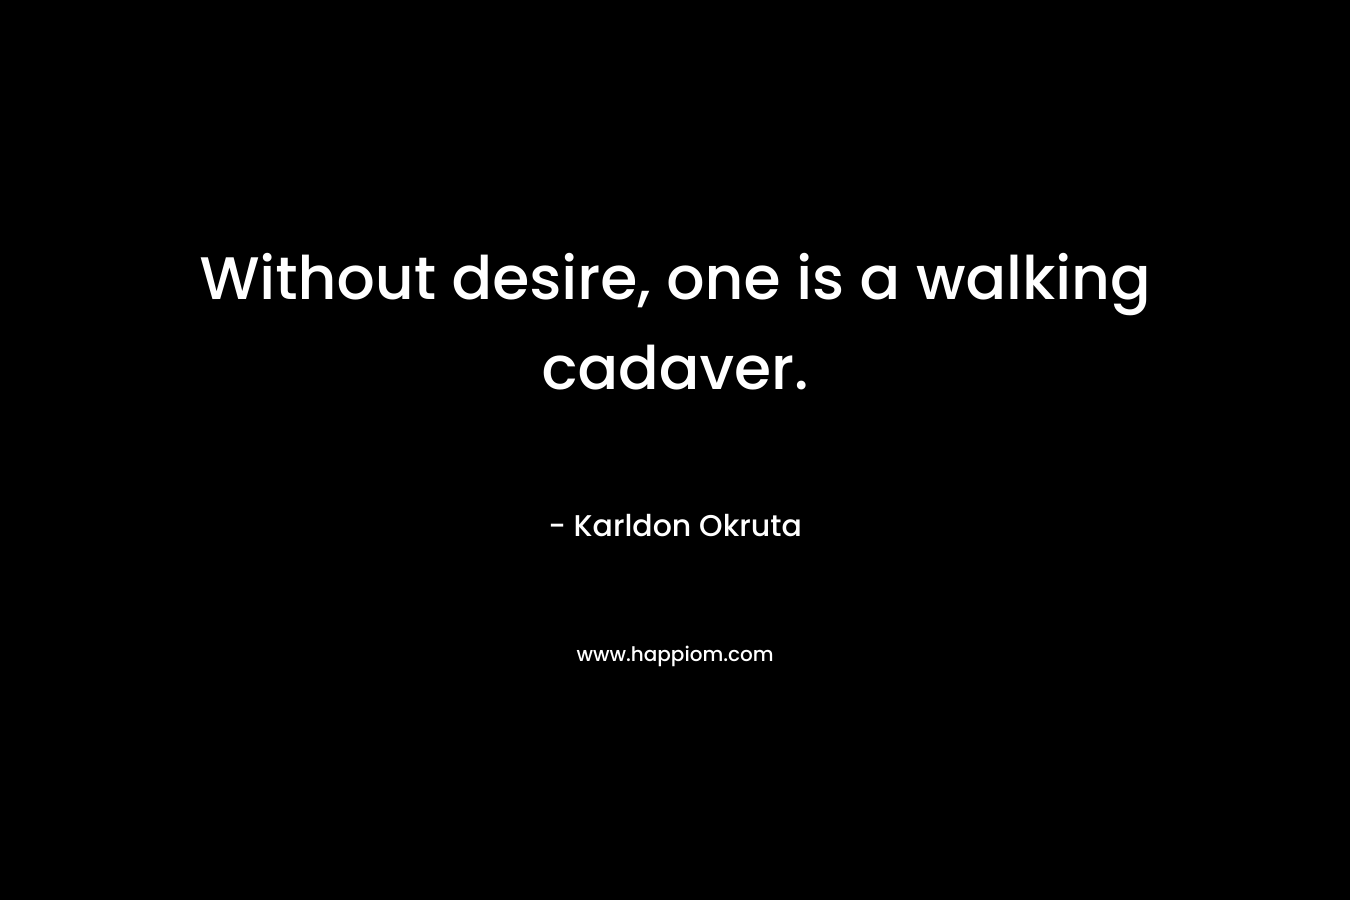 Without desire, one is a walking cadaver. – Karldon Okruta